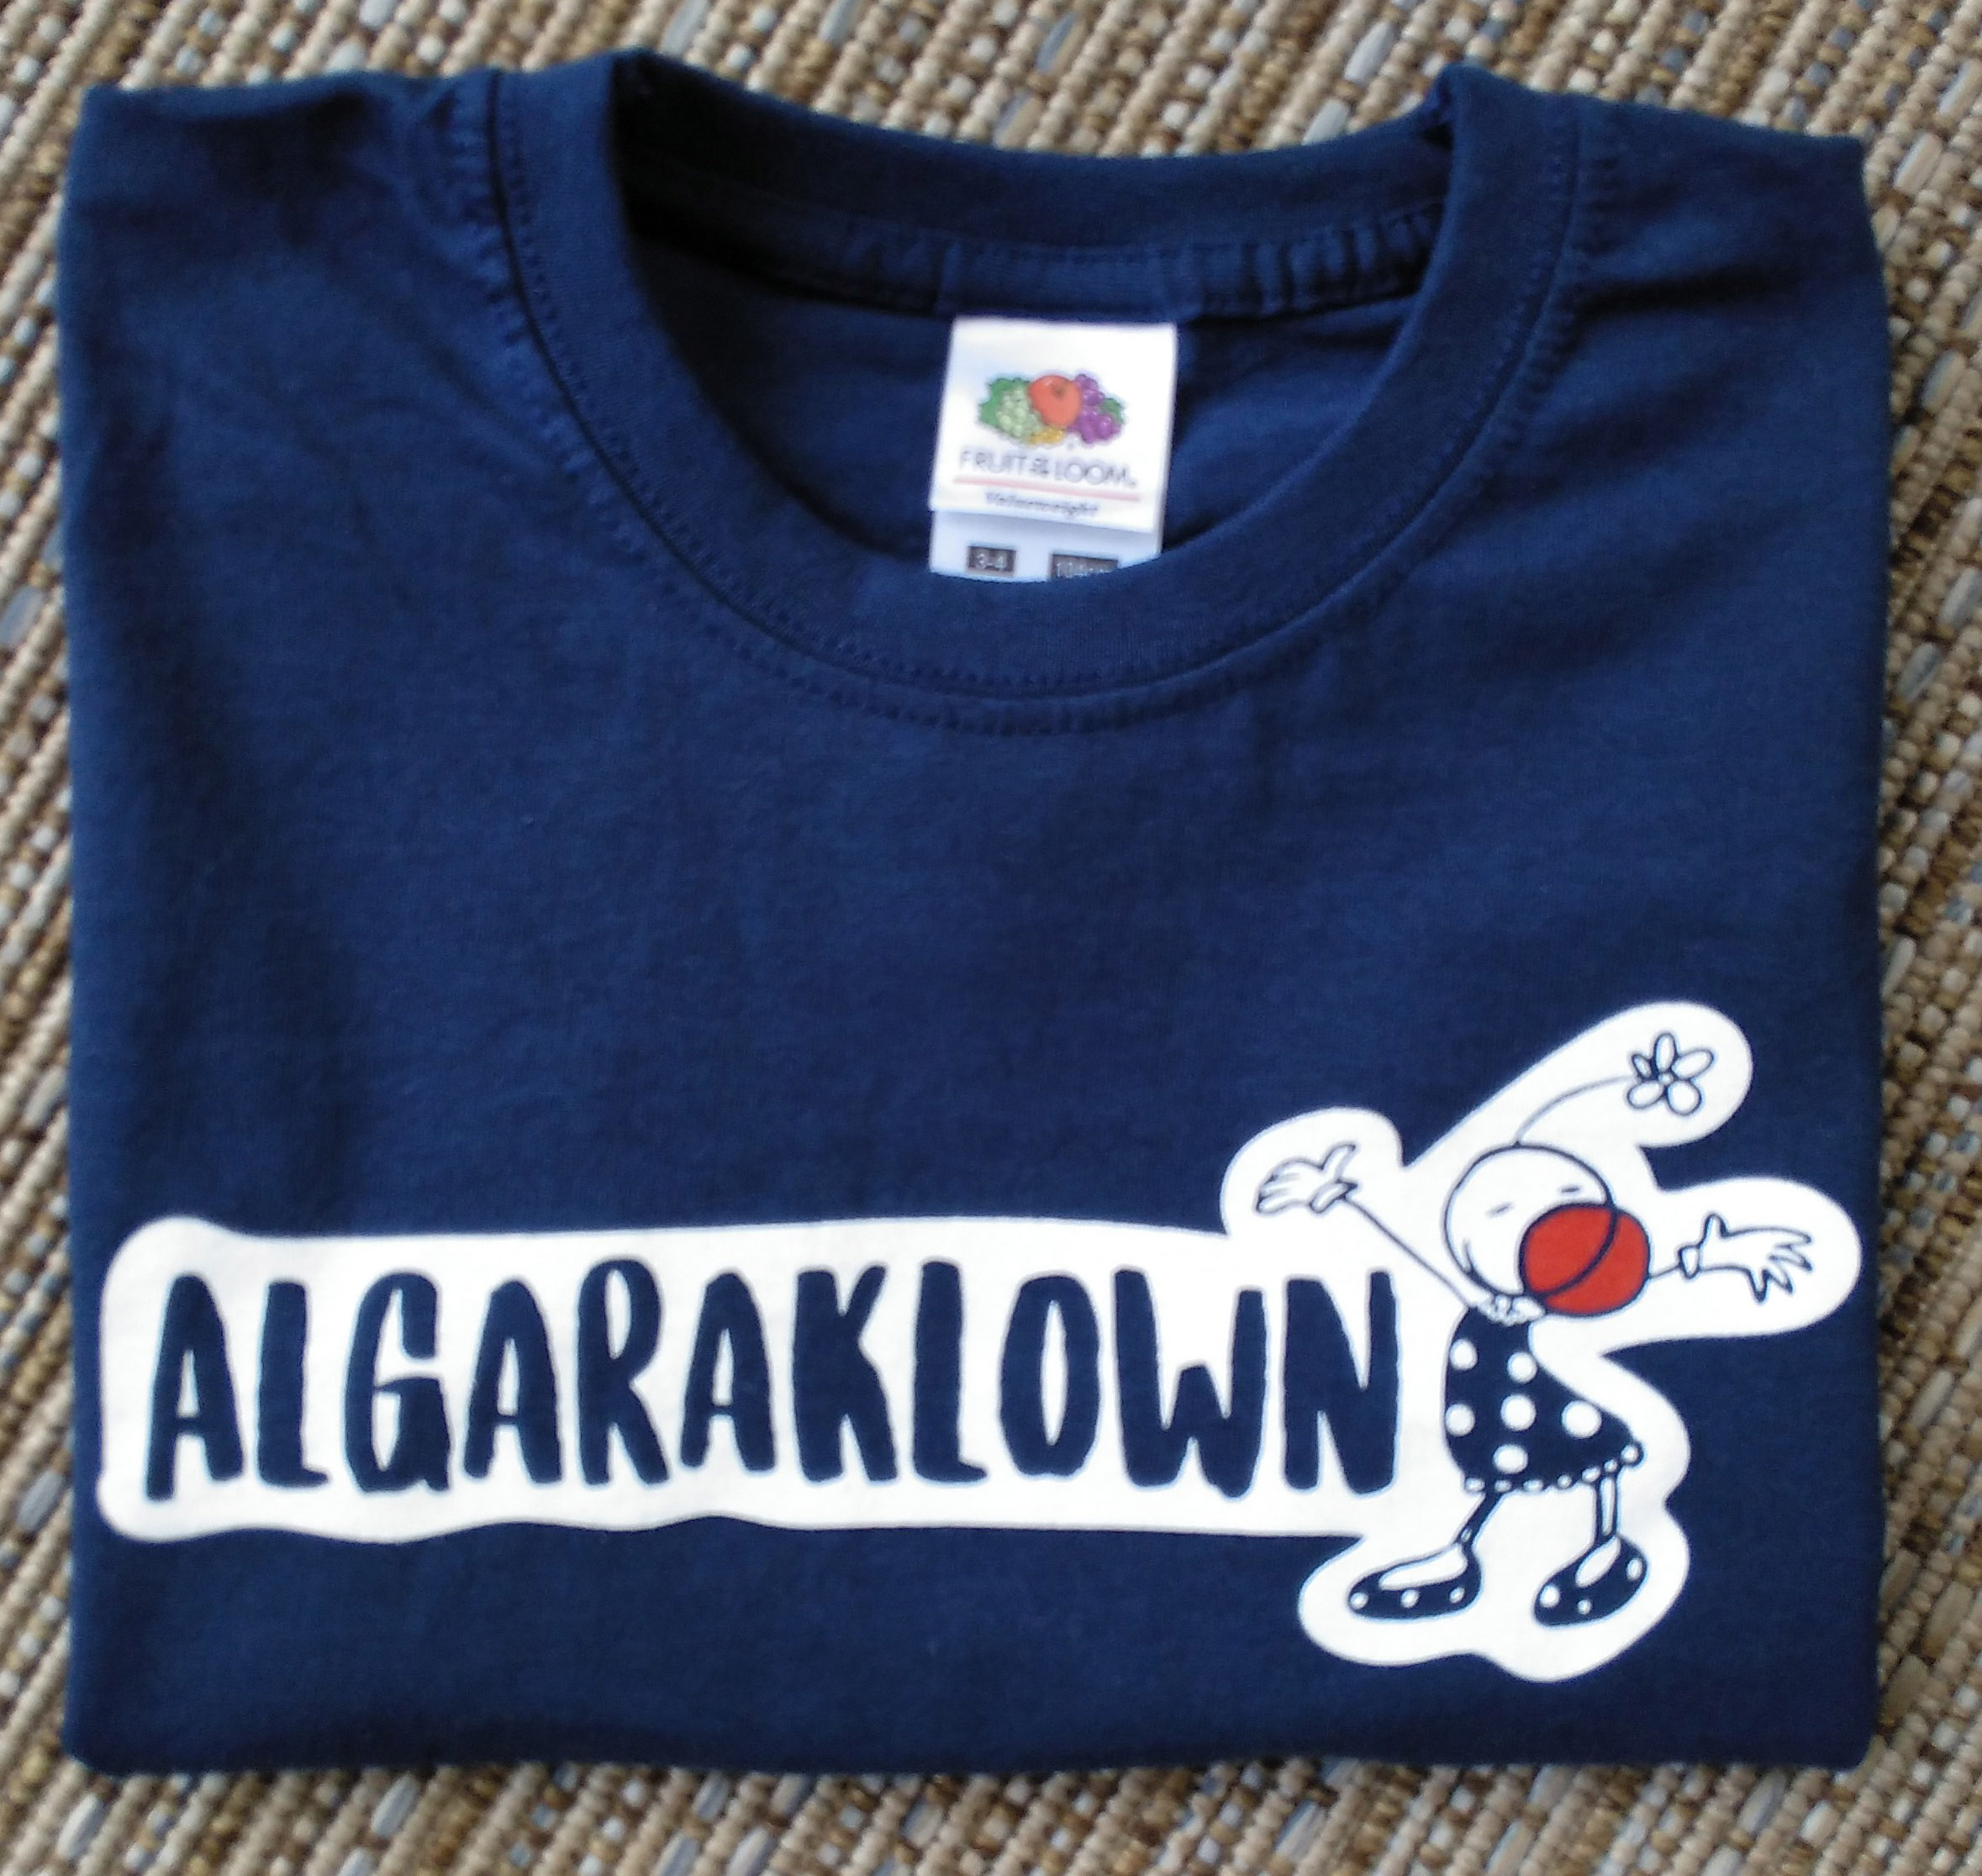 Camiseta Infantil Algaraklown Payasos de Hospital Donostia